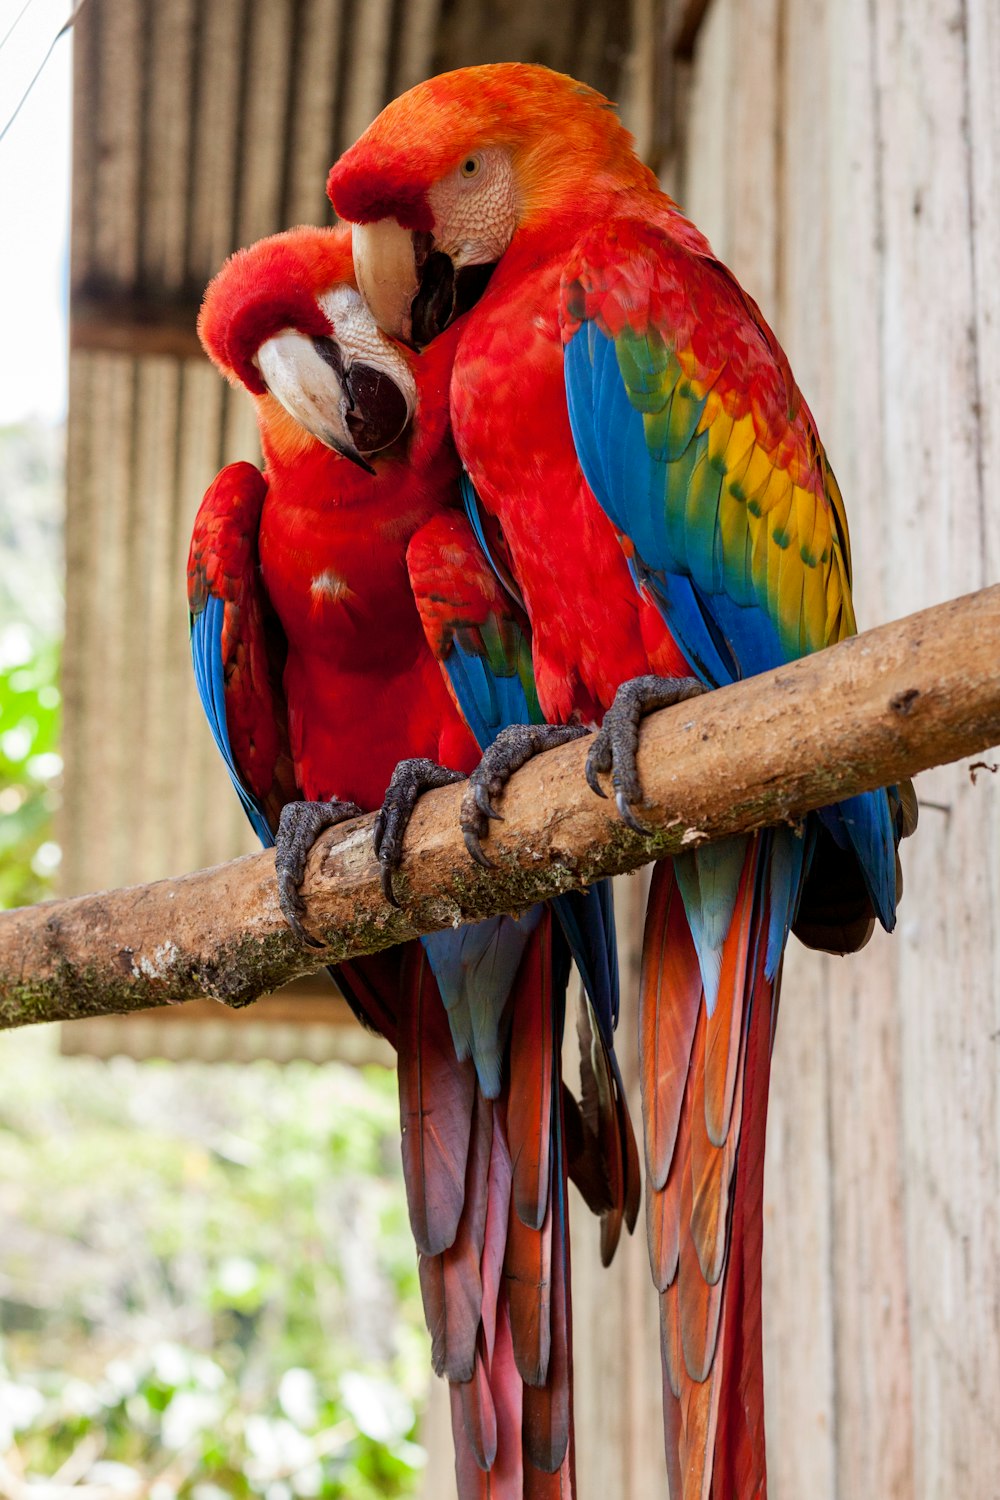 500+ Parrots Pictures [HD] | Download Free Images on Unsplash